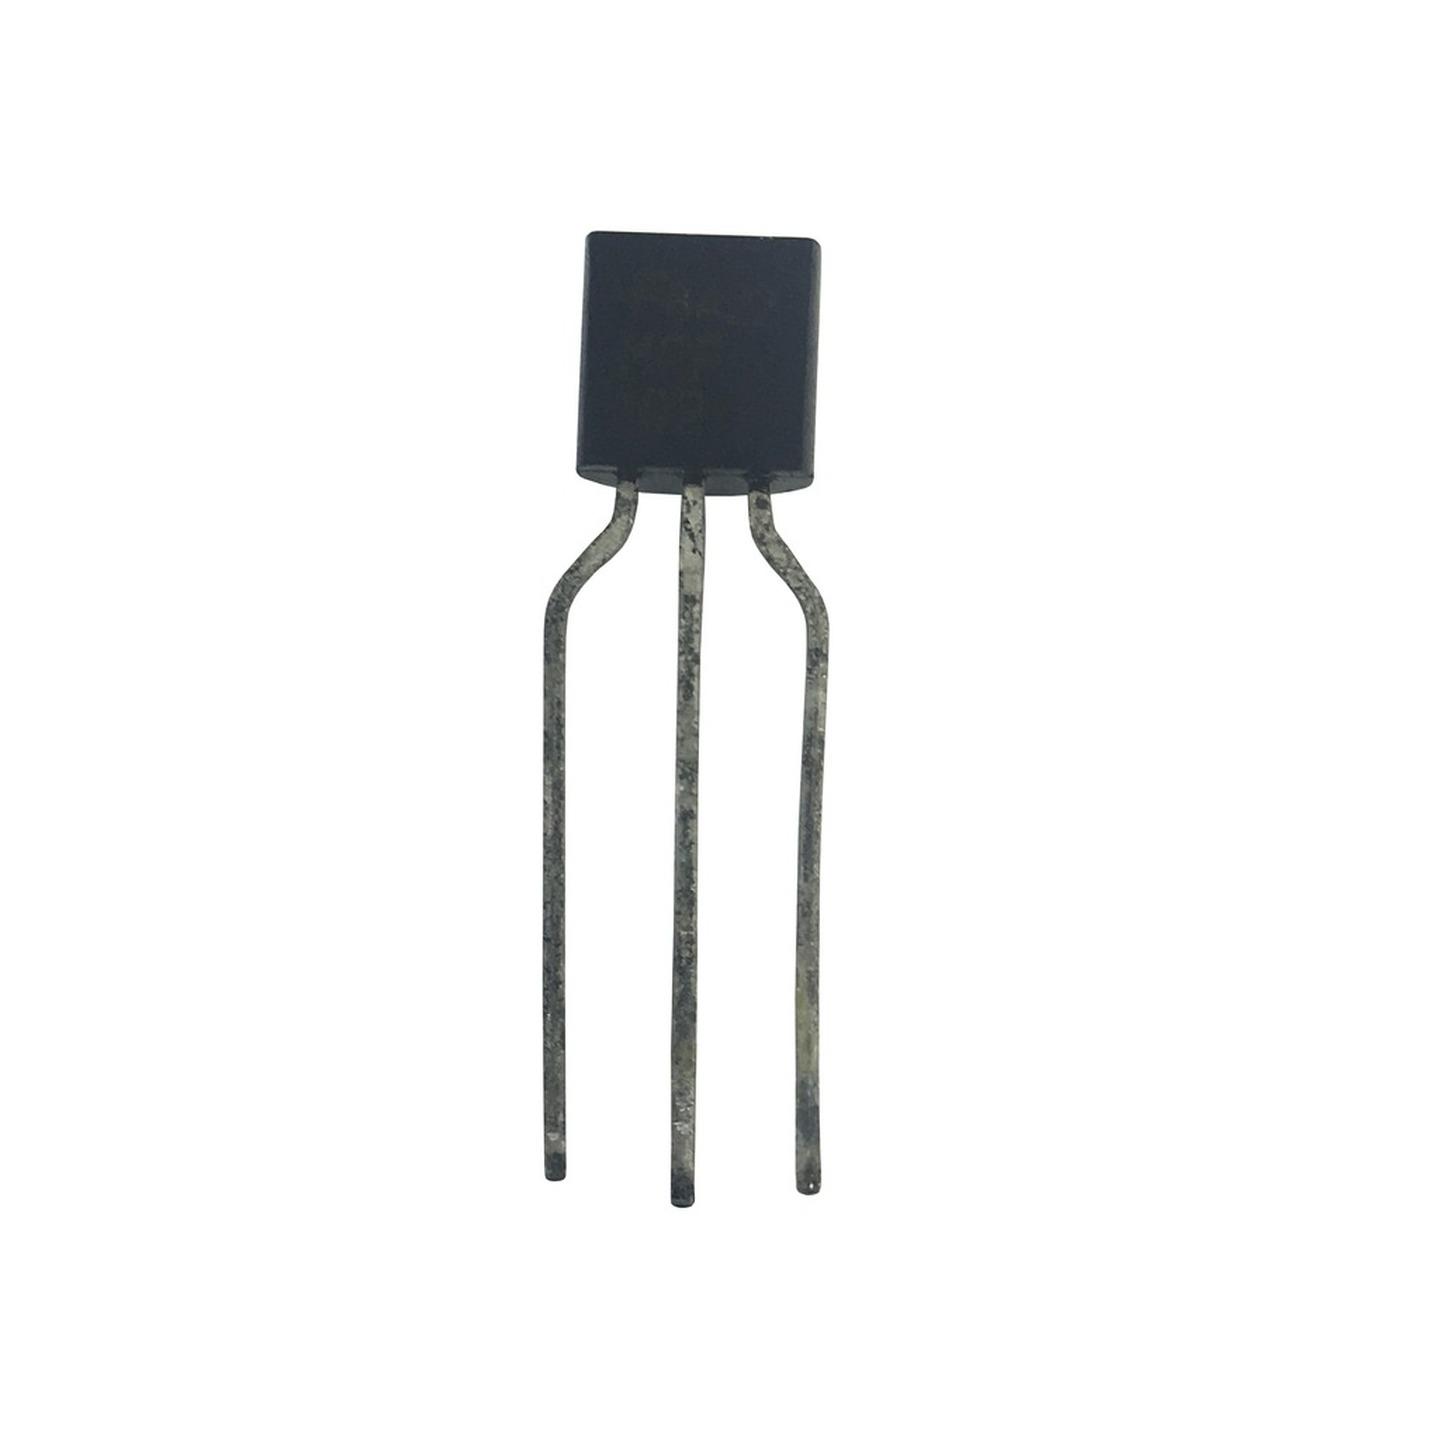 BC639 NPN Transistor